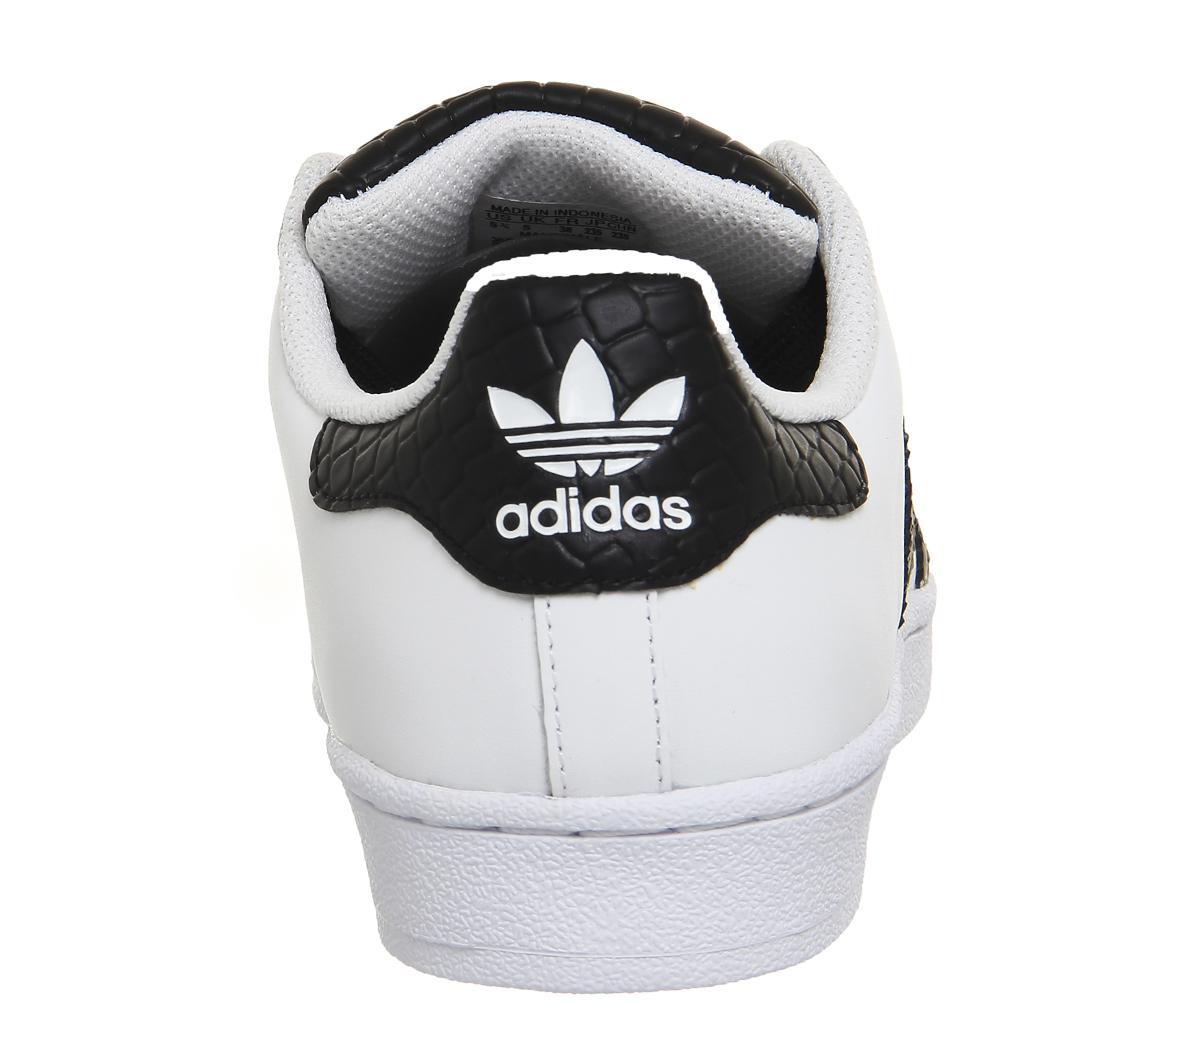 adidas Superstar 1 White Black Croc - Women's Trainers